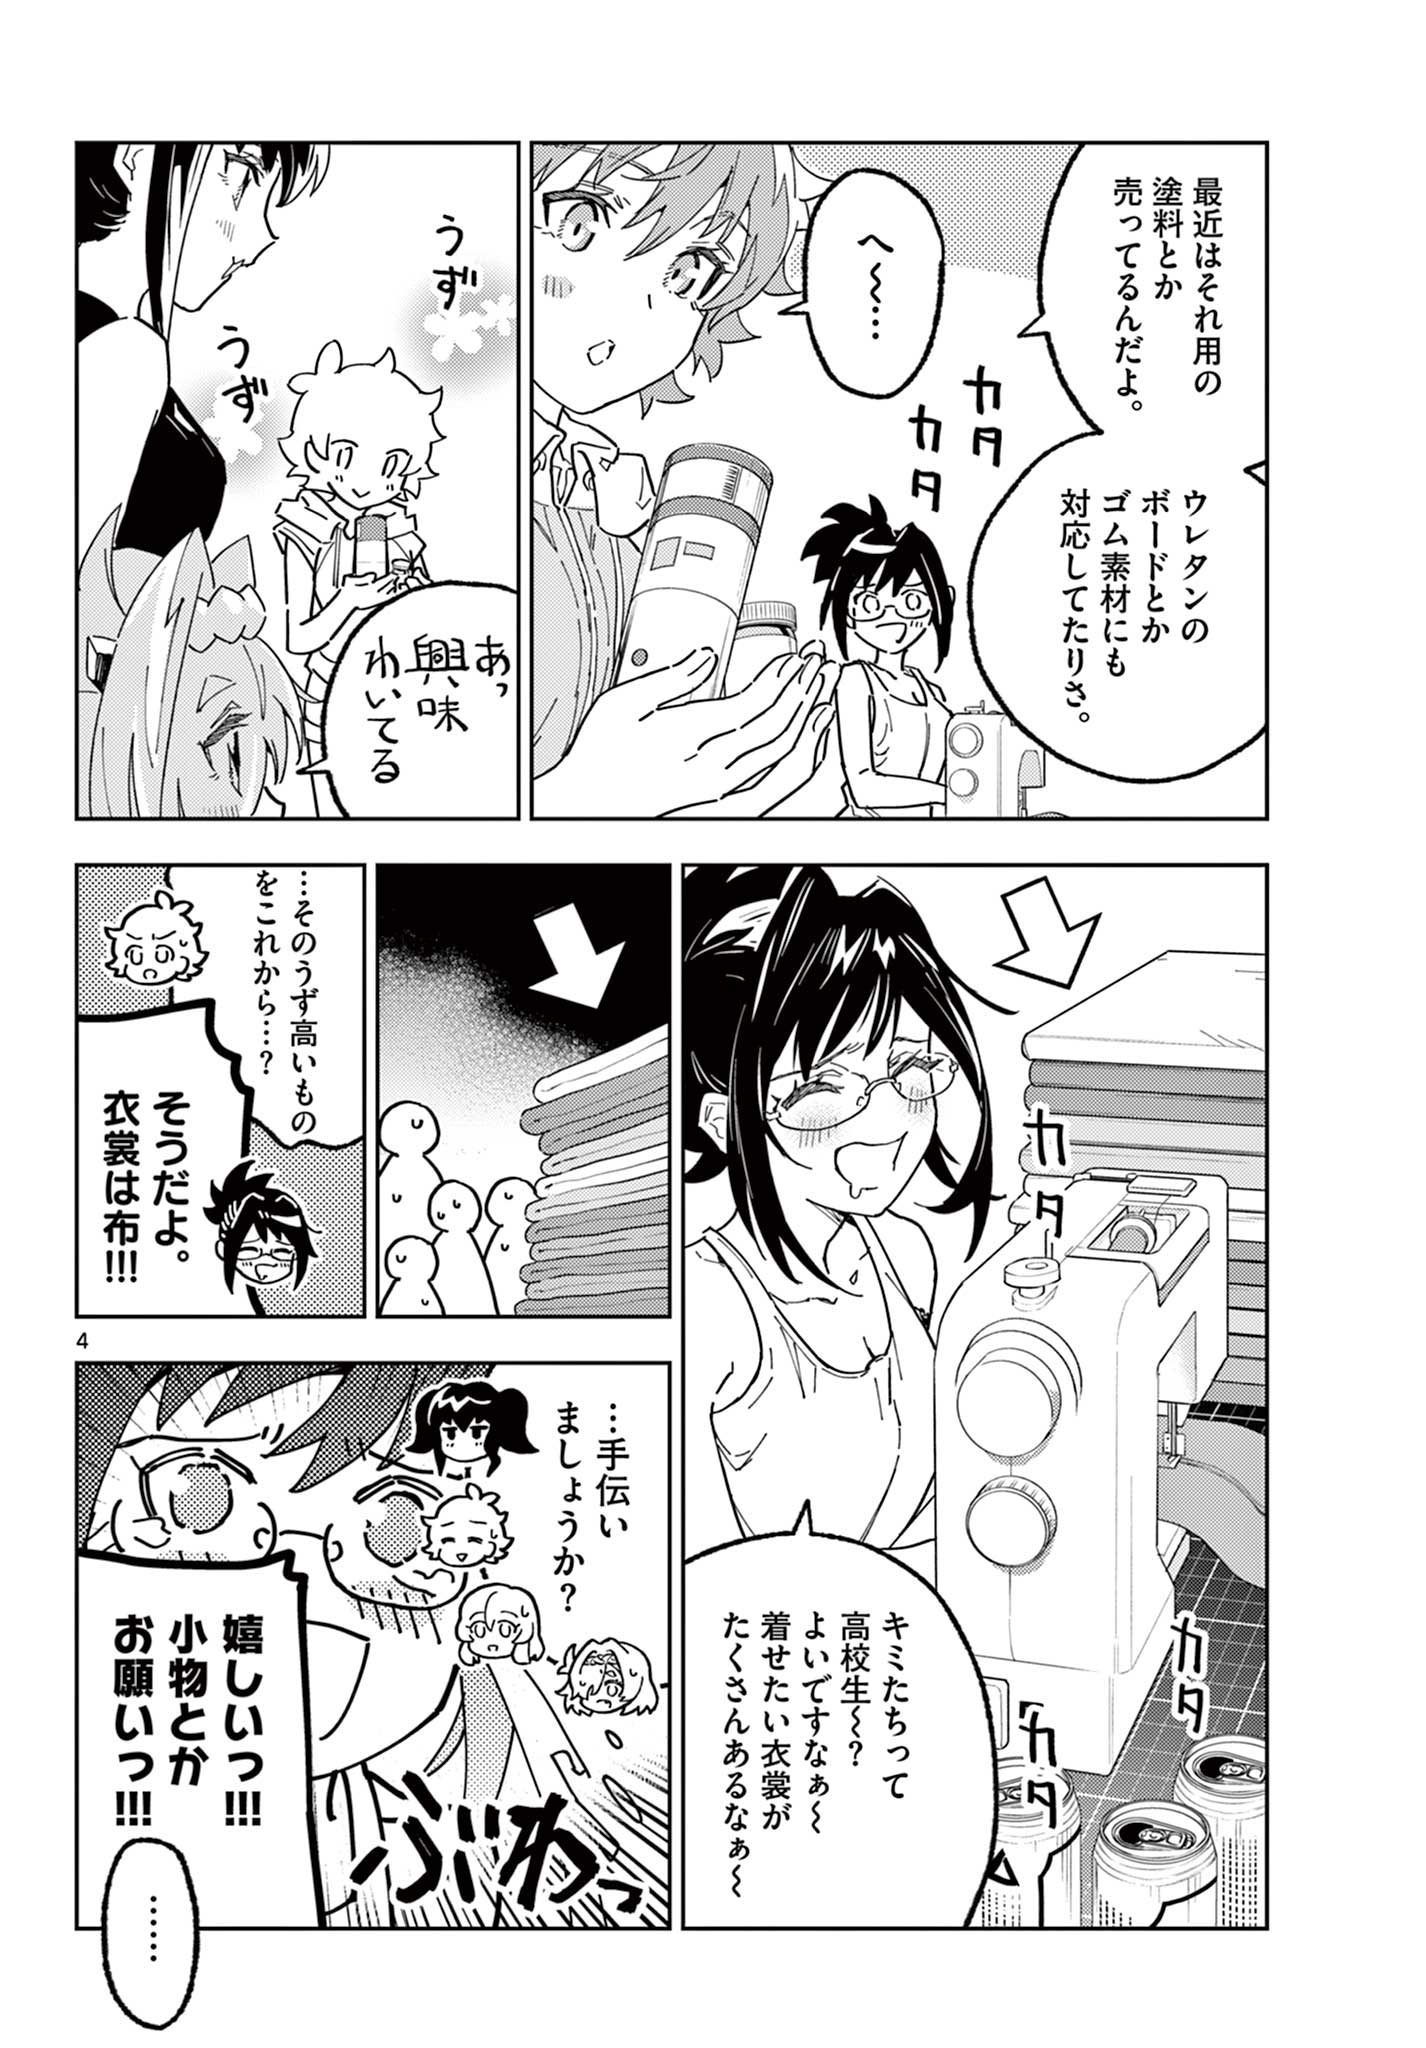 Gareki! Modeller Girls no Houkago - Chapter 18.5 - Page 4